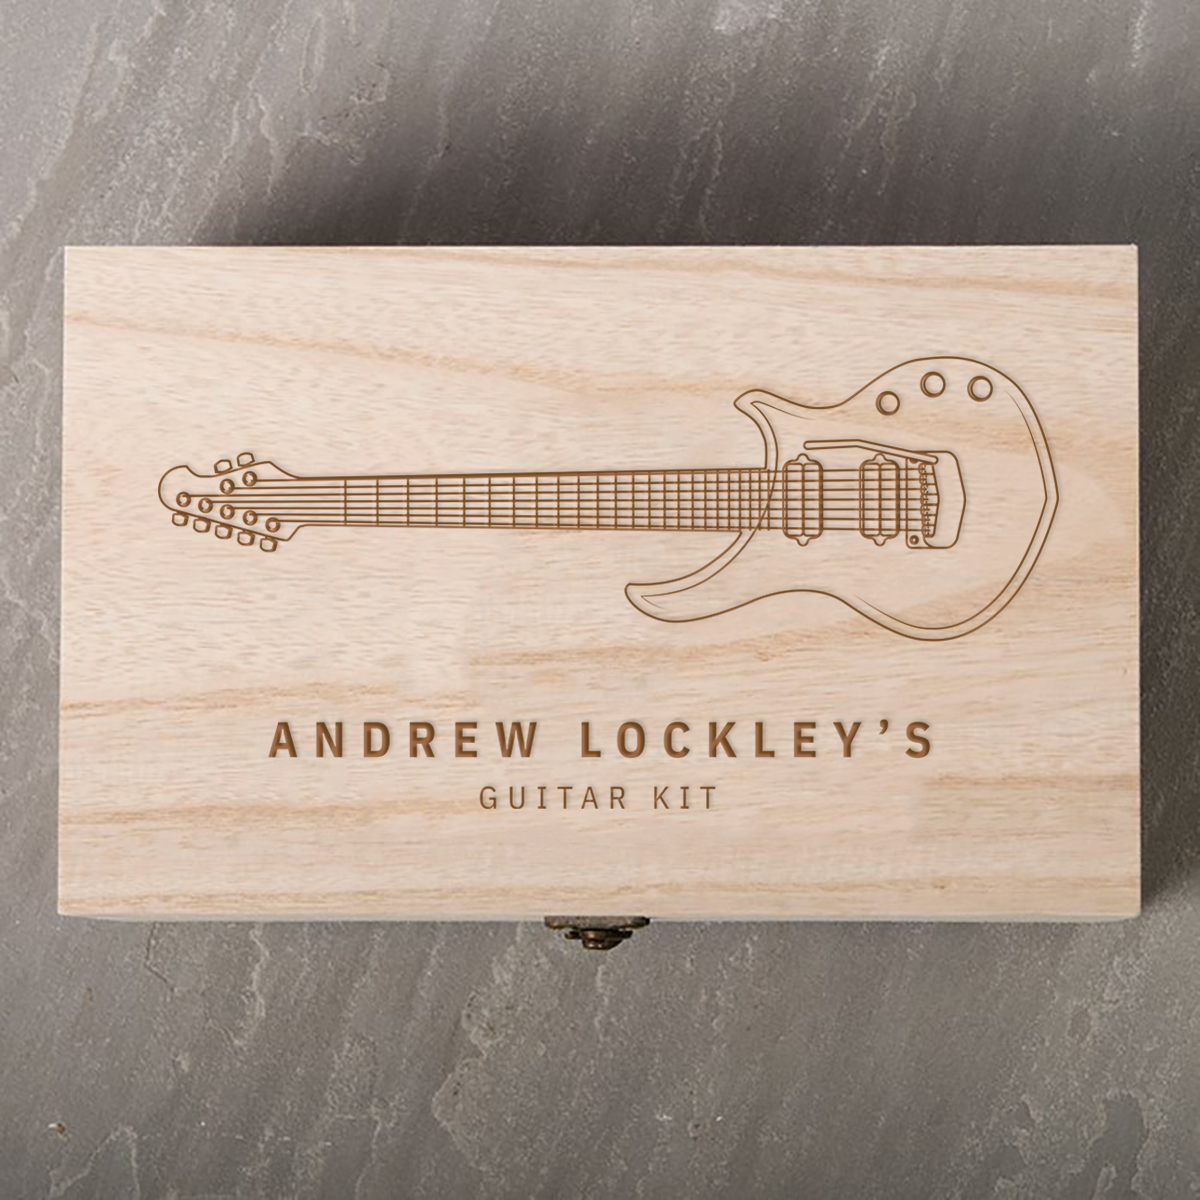 Personalised Wooden Box - Guitar Kit